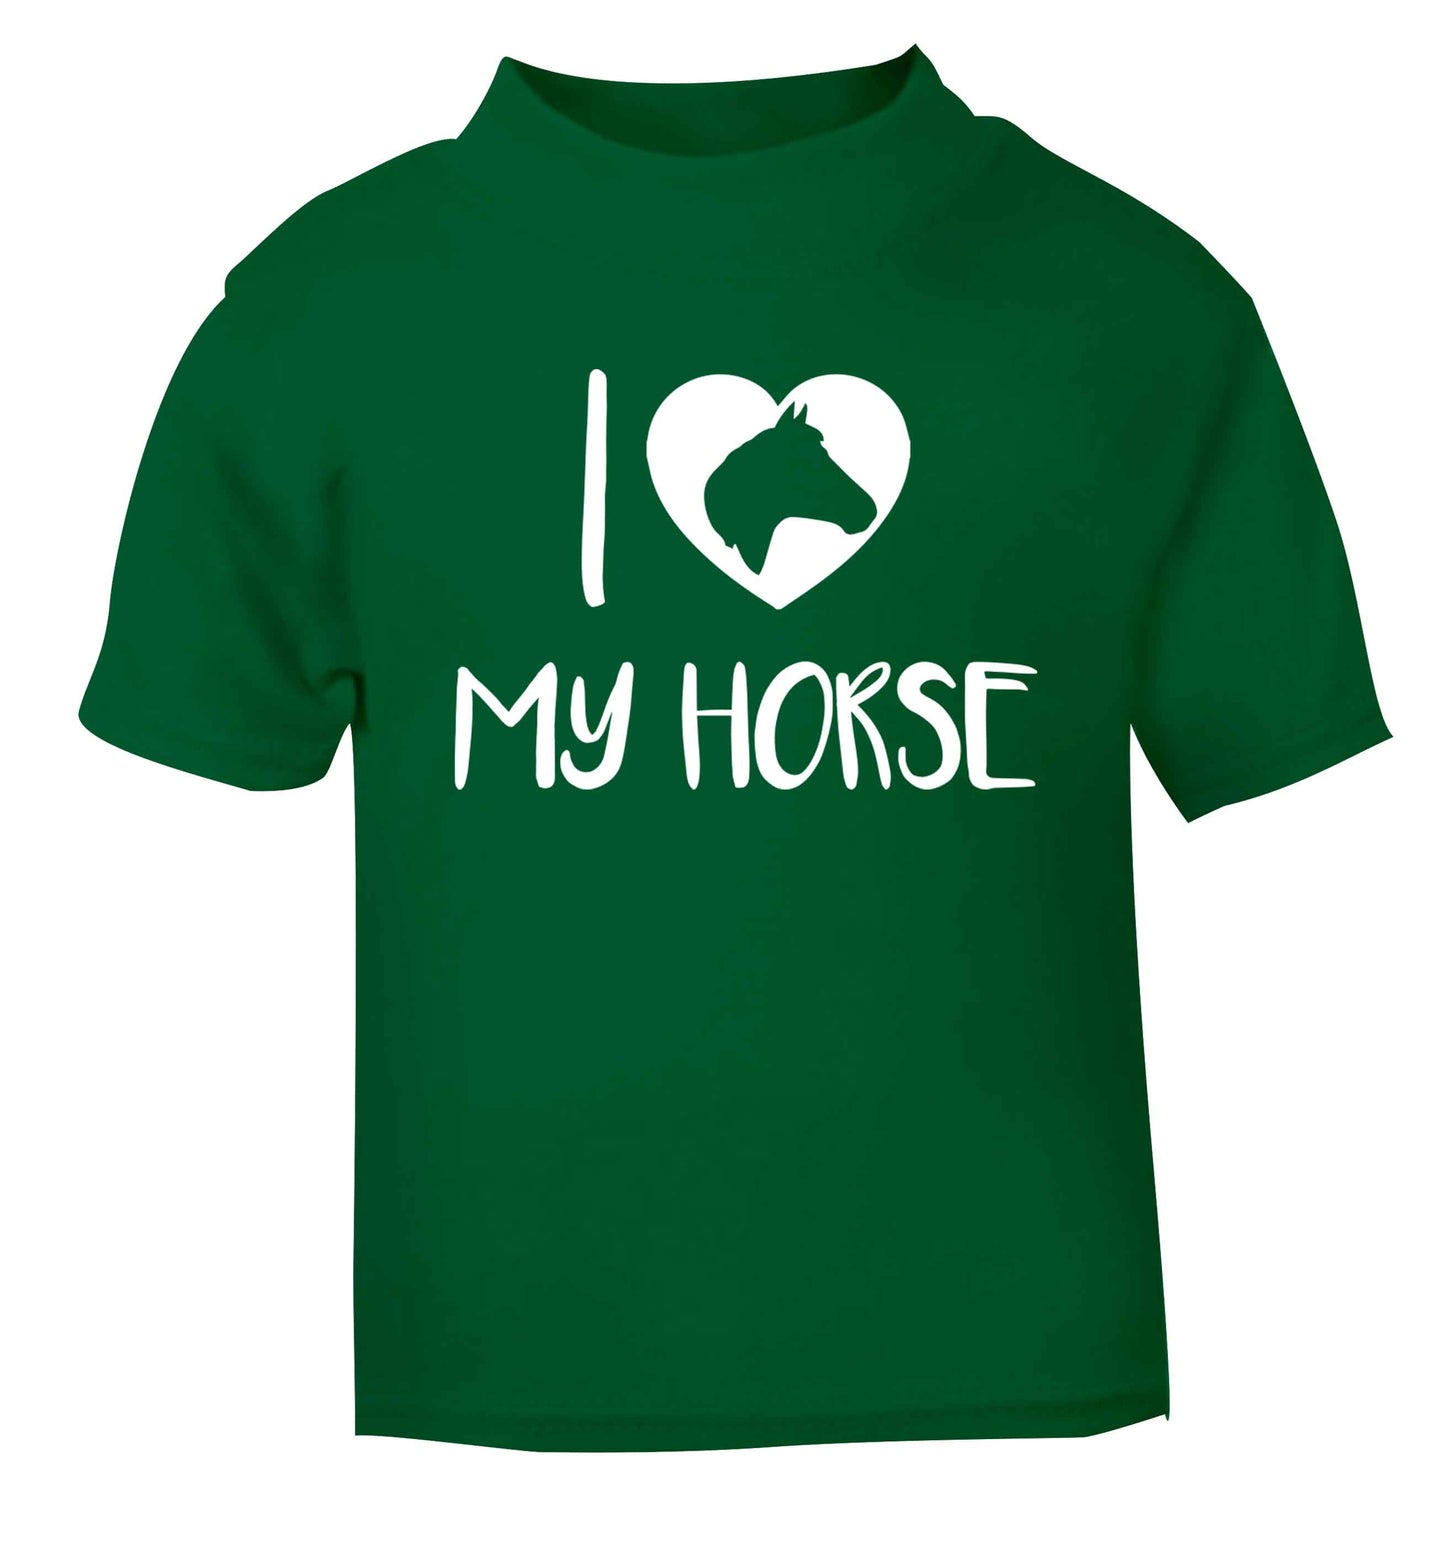 I love my horse green baby toddler Tshirt 2 Years